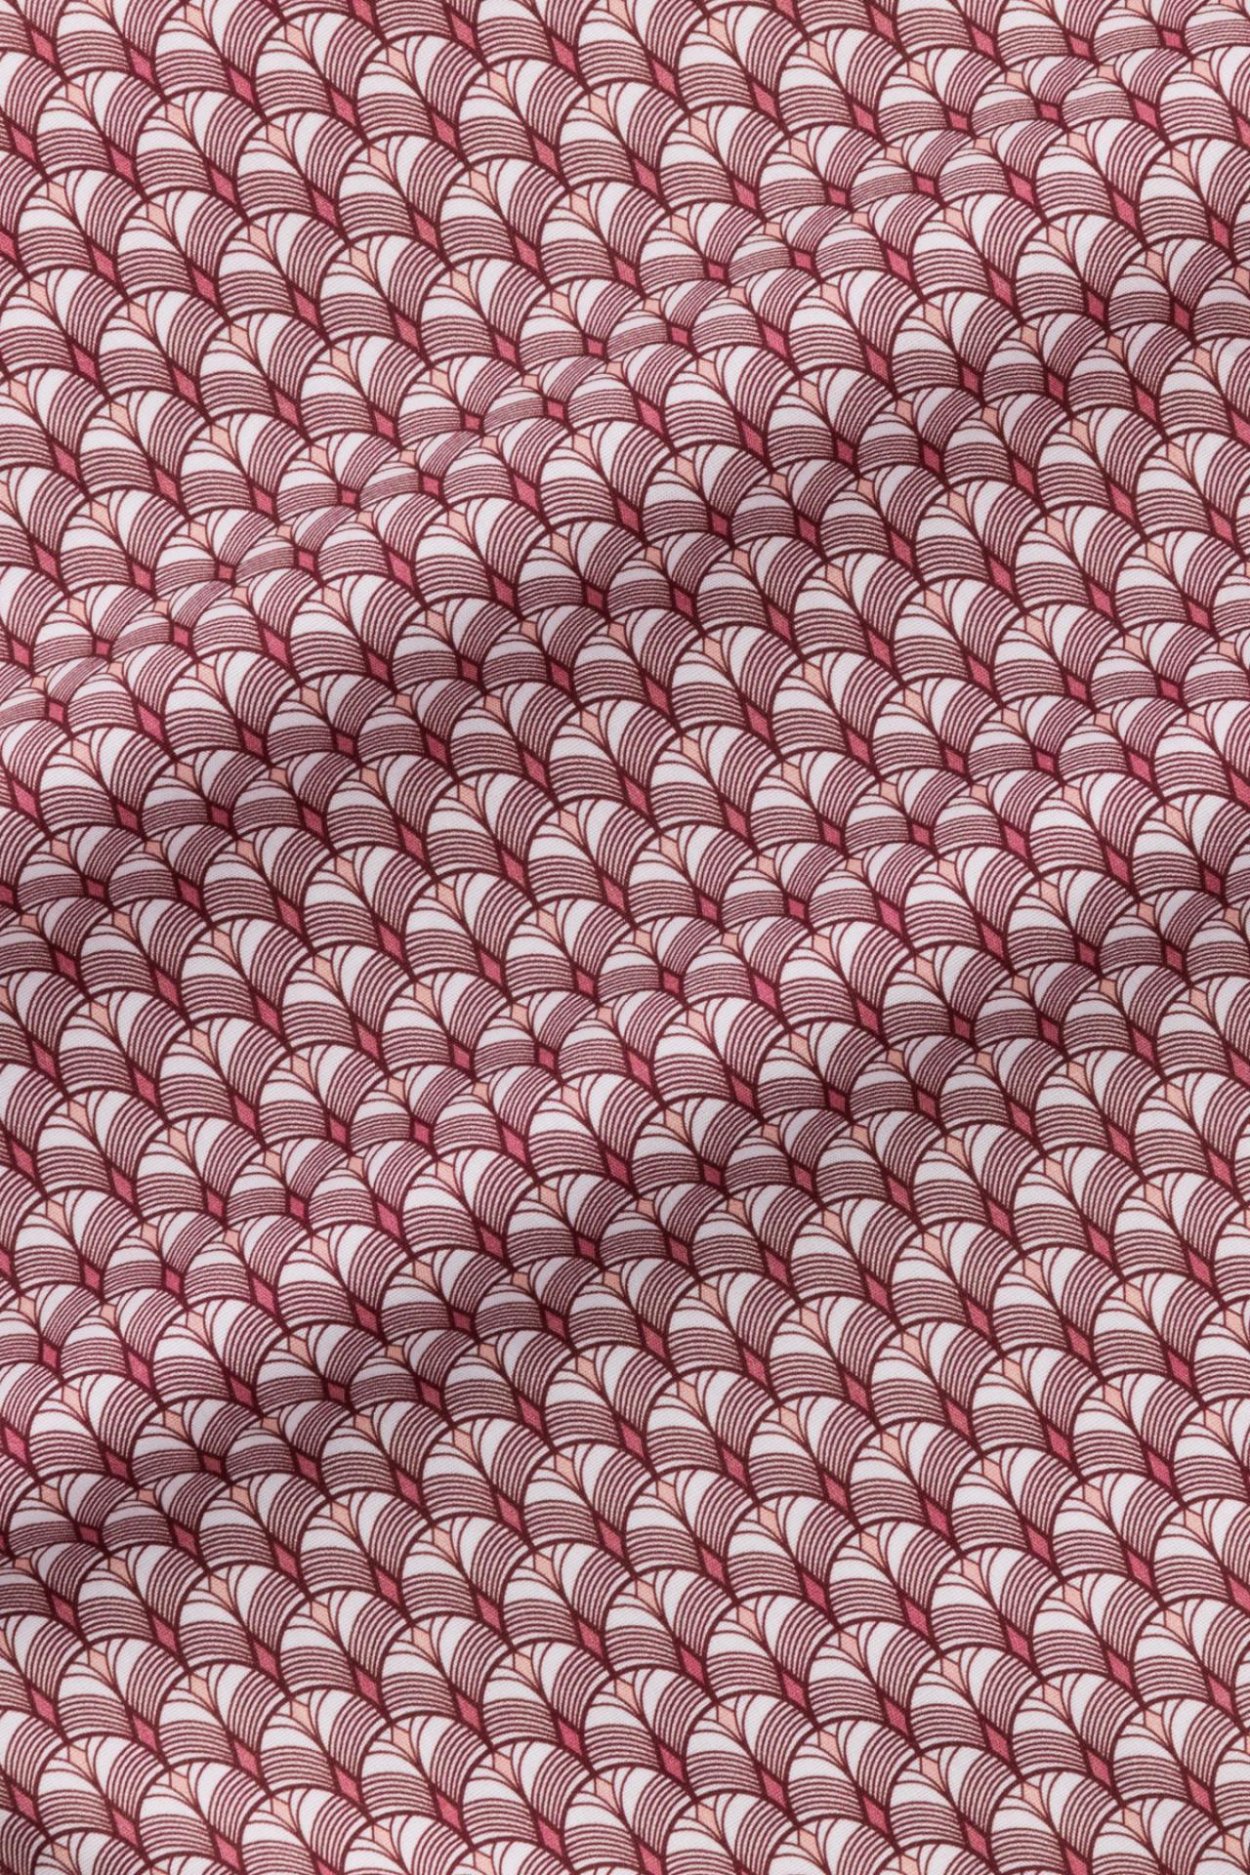 Pánská červená strečová košile s geometrickým vzorem